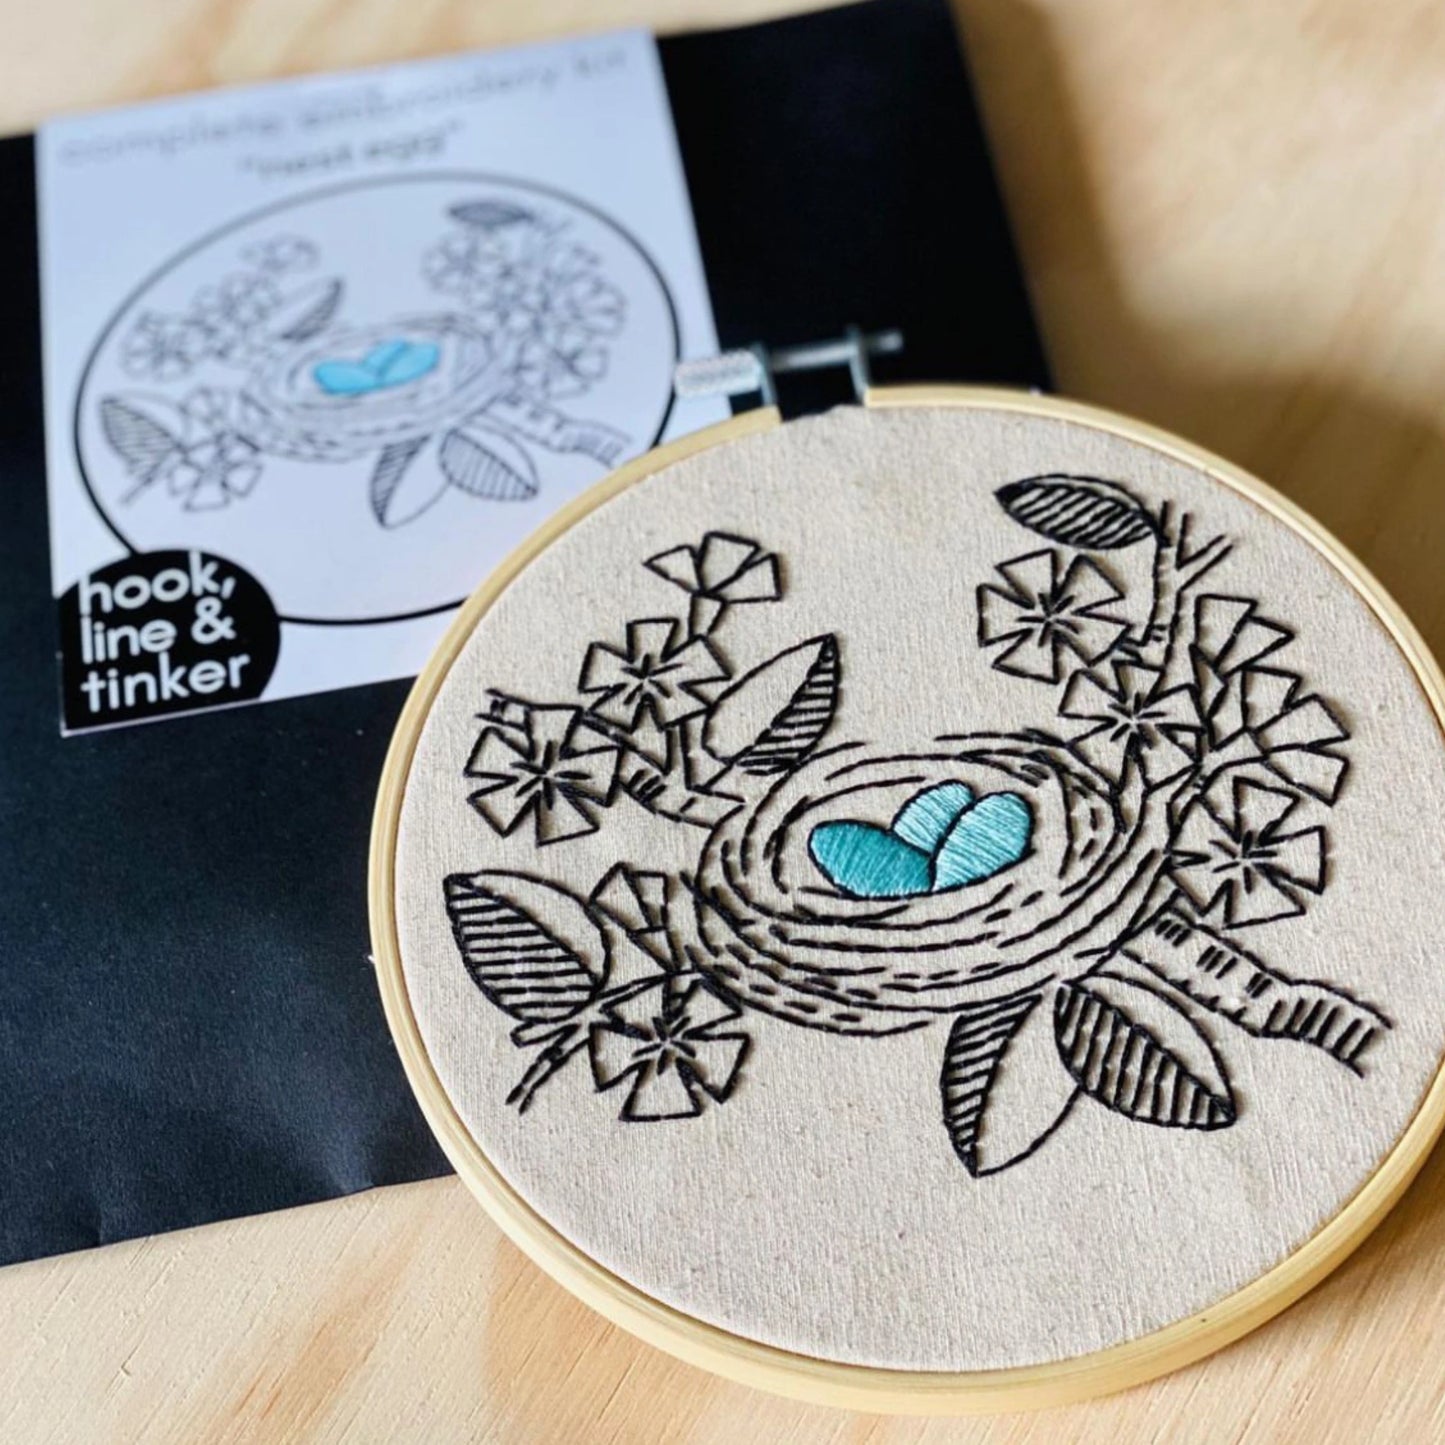 Spring Embroidery Kit - Spring Nest by Hook Line & Tinker - Alder & Alouette